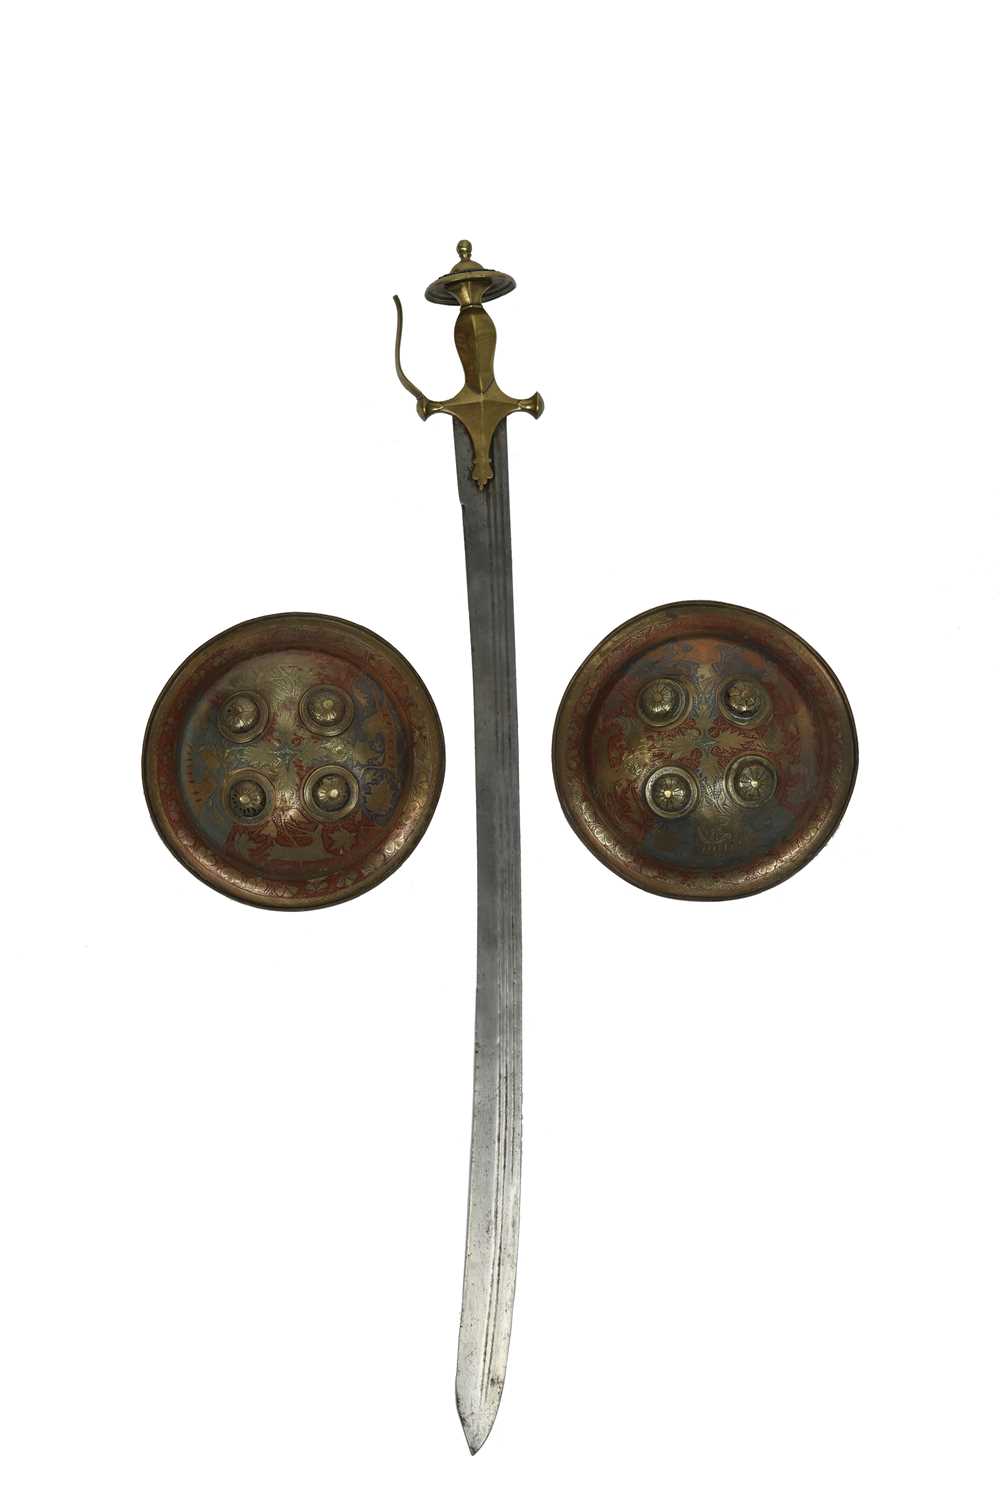 An Indian sword (sohsun pata), single edged blade 28 in. with slight forward curve, three narrow